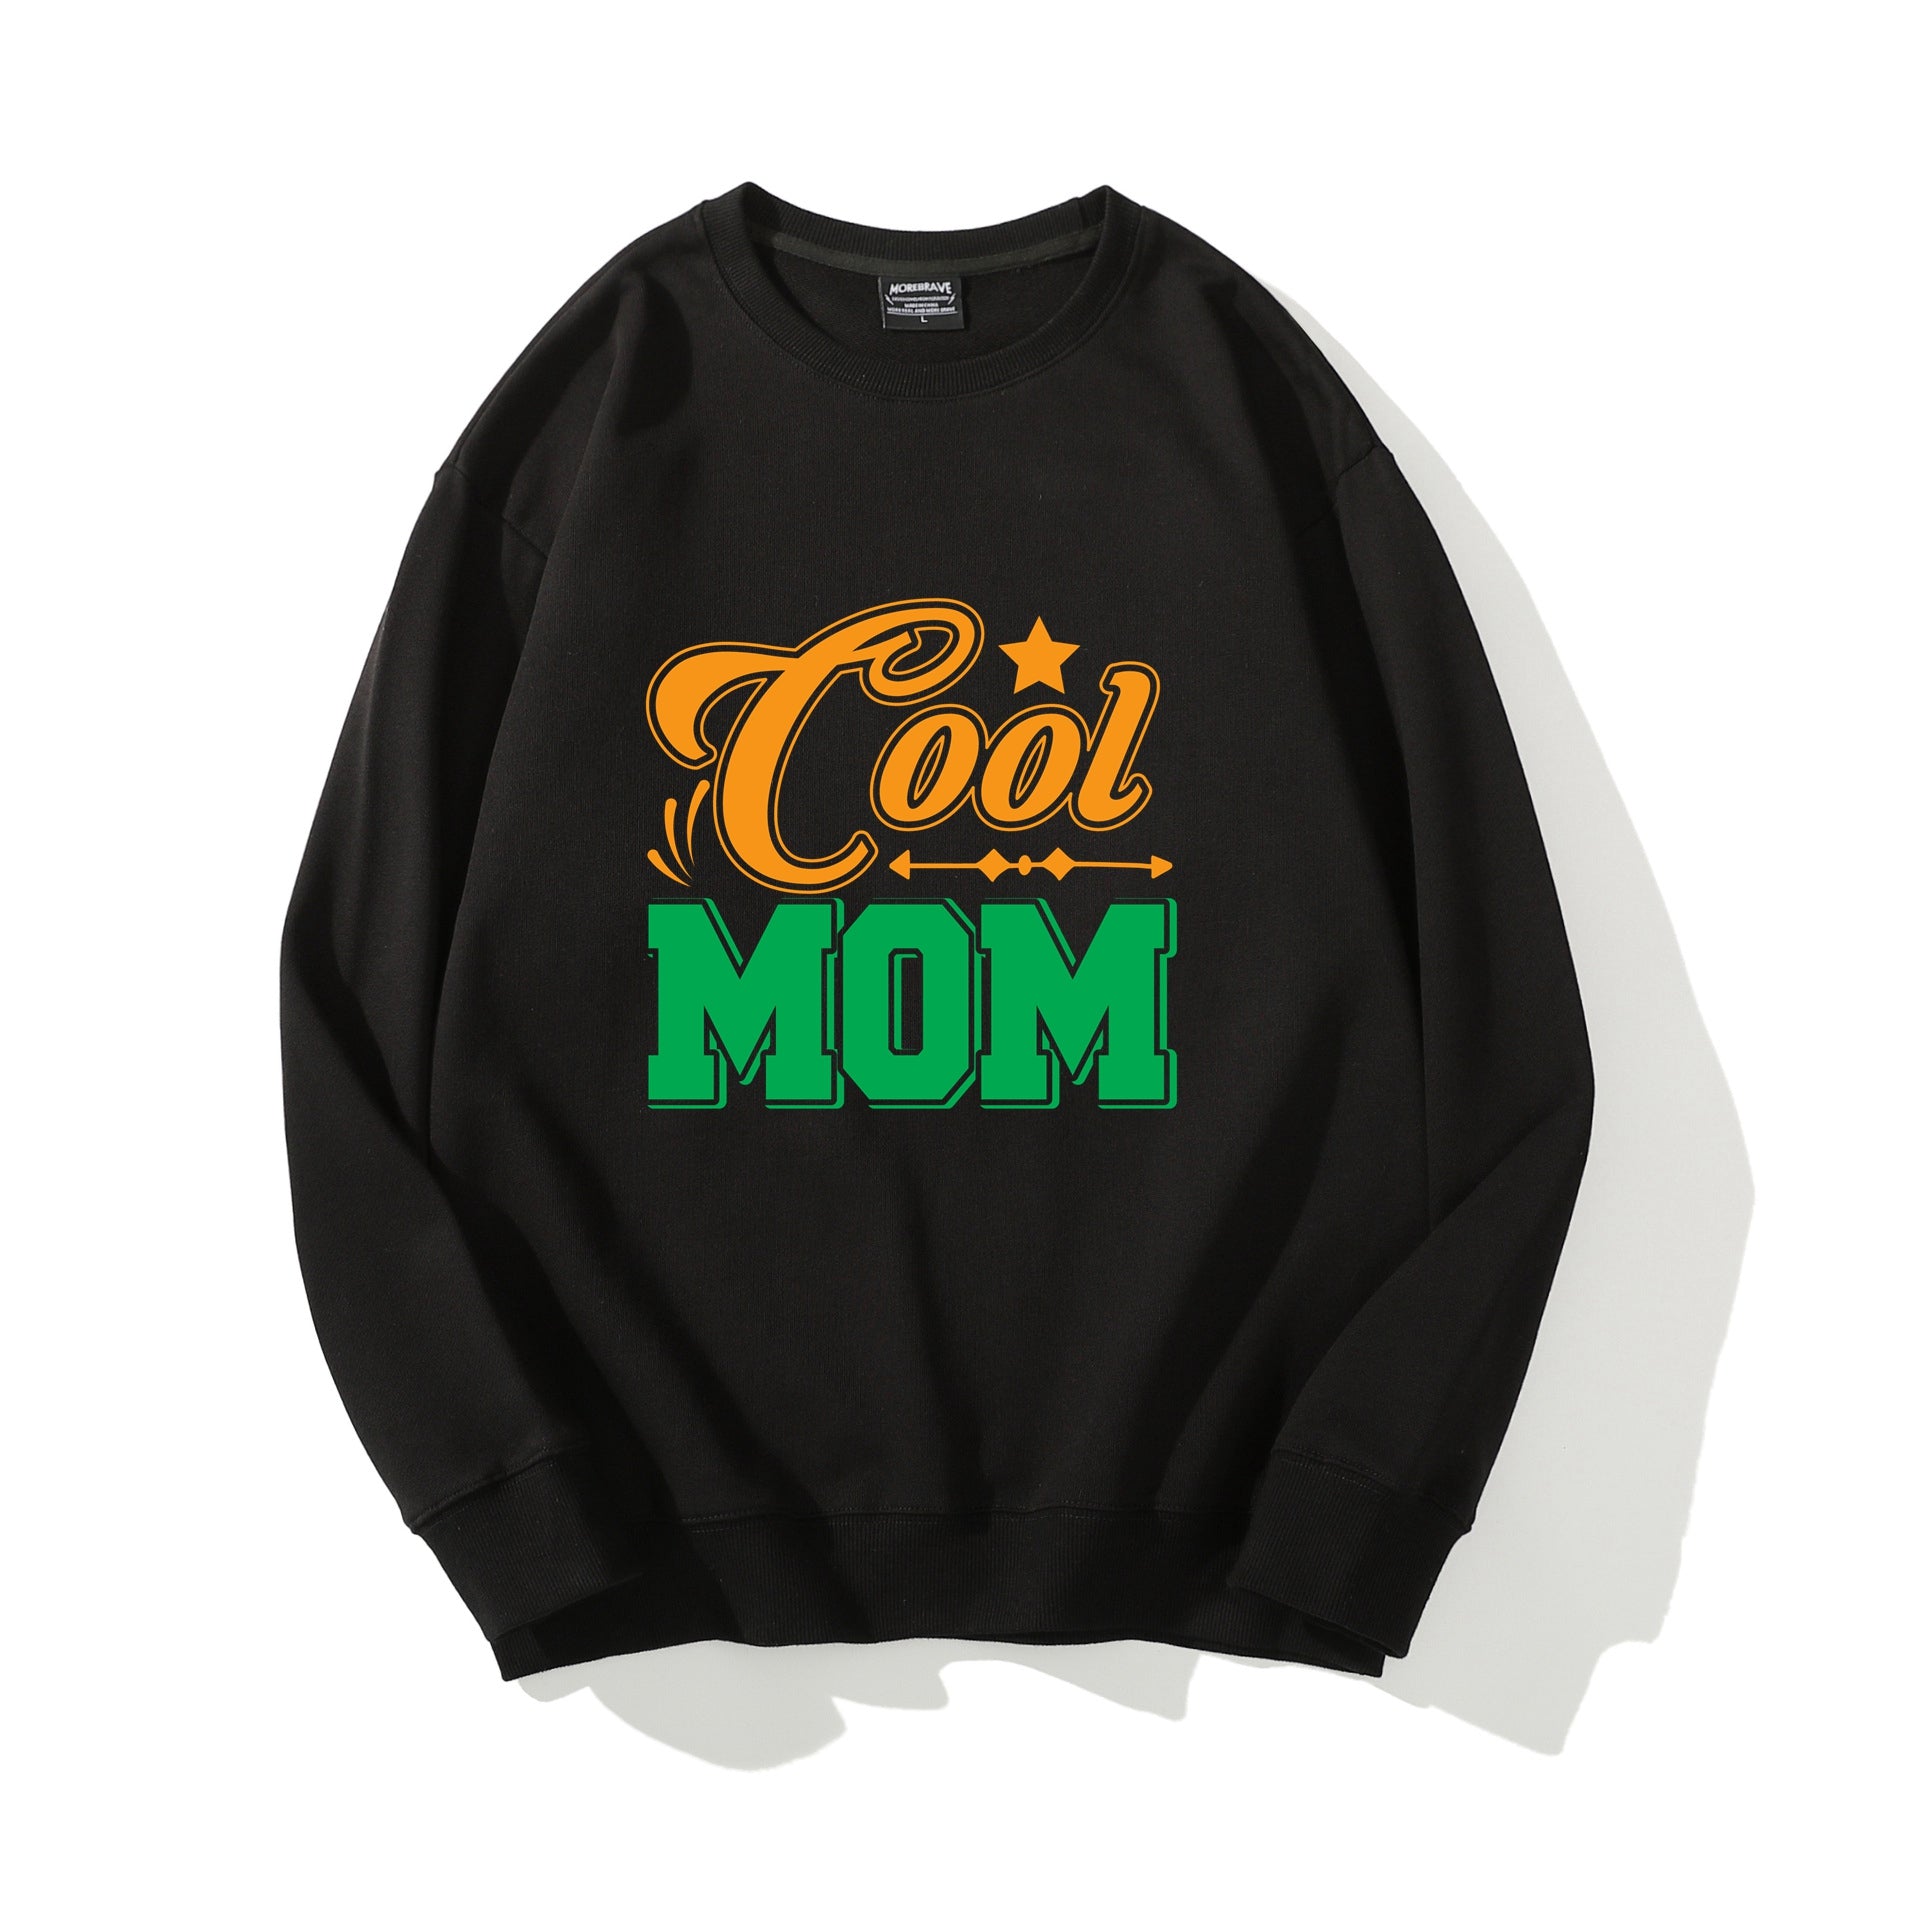 Winter Cool Mom Crew Neck Sweatshirt for Men Cotton Tops Long Sleeves